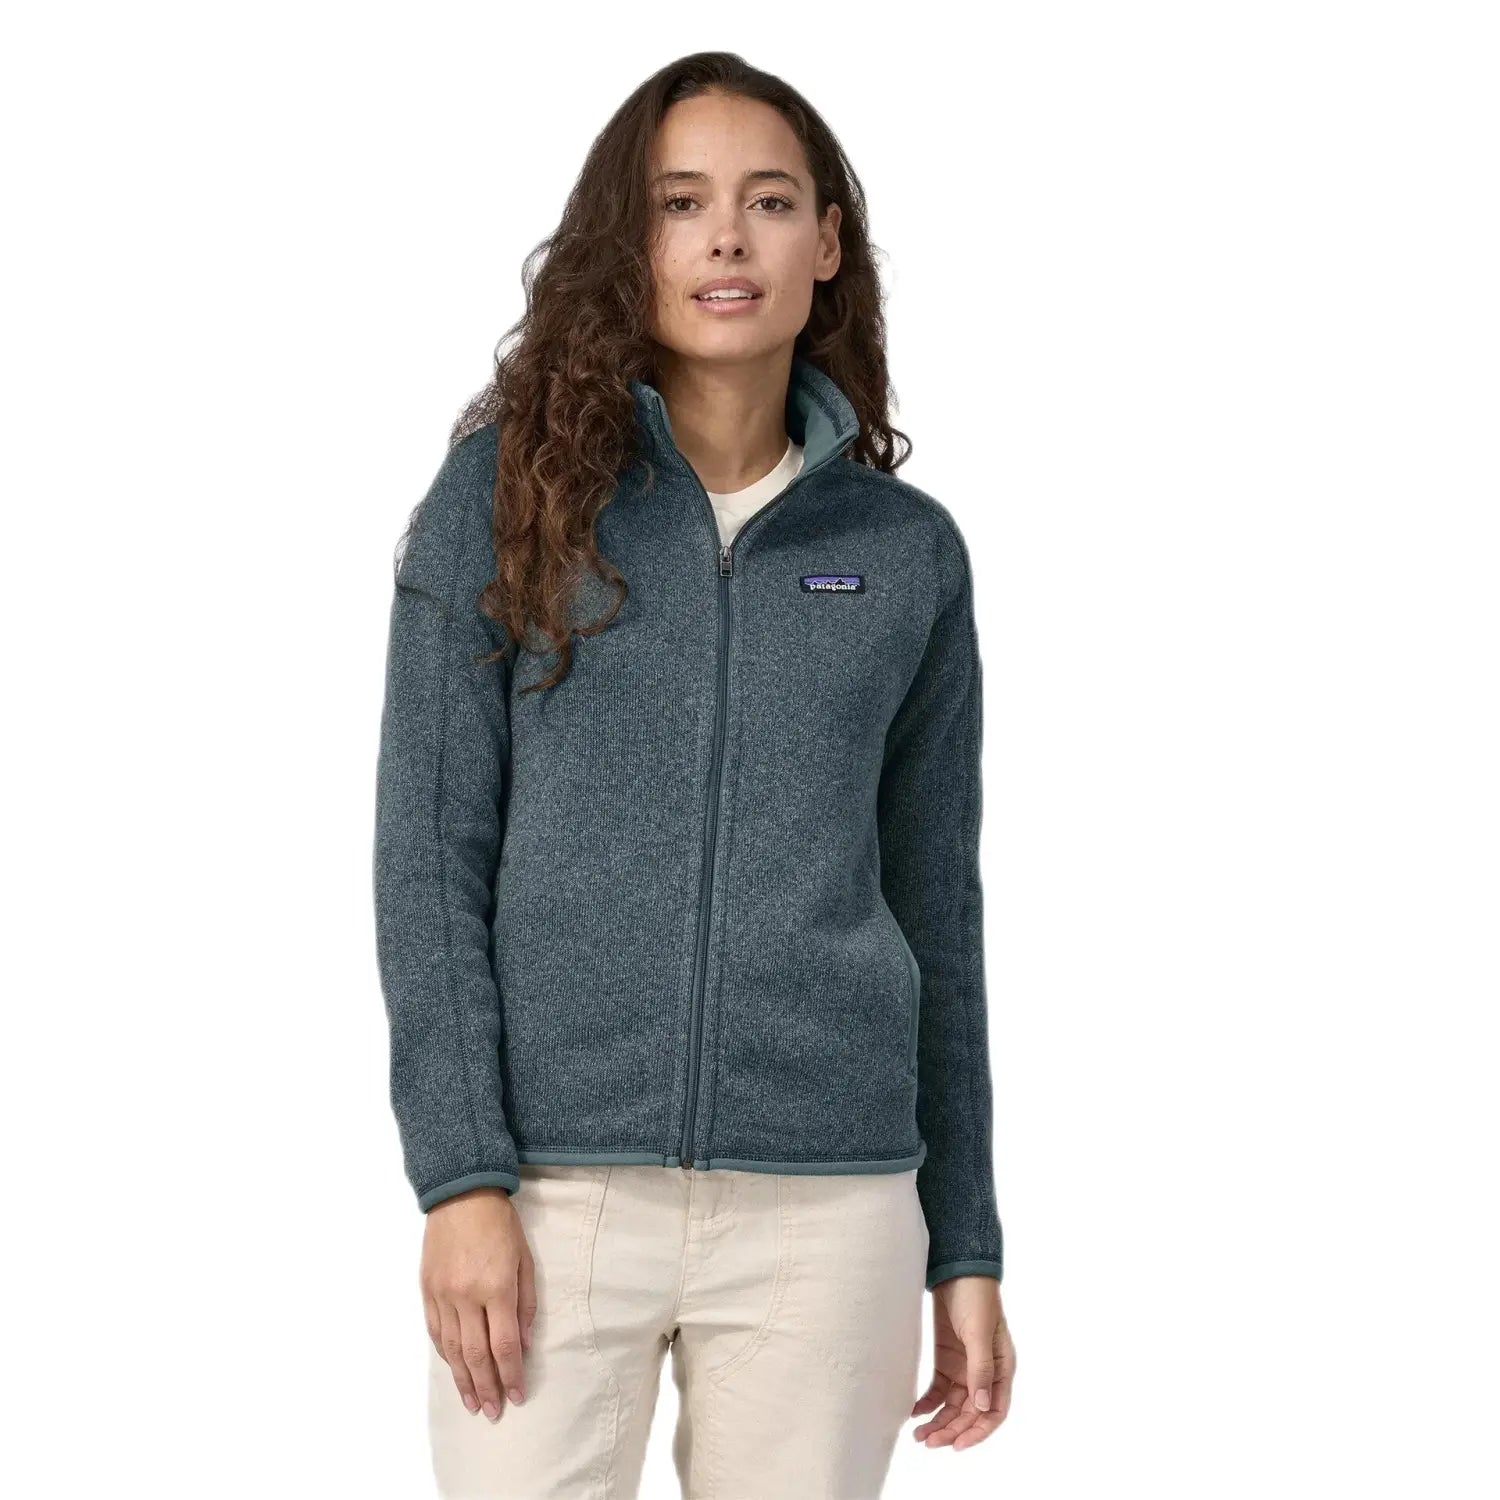 Patagonia Women's Better Sweater® Fleece Jacket, Nouveau Green, front view on model